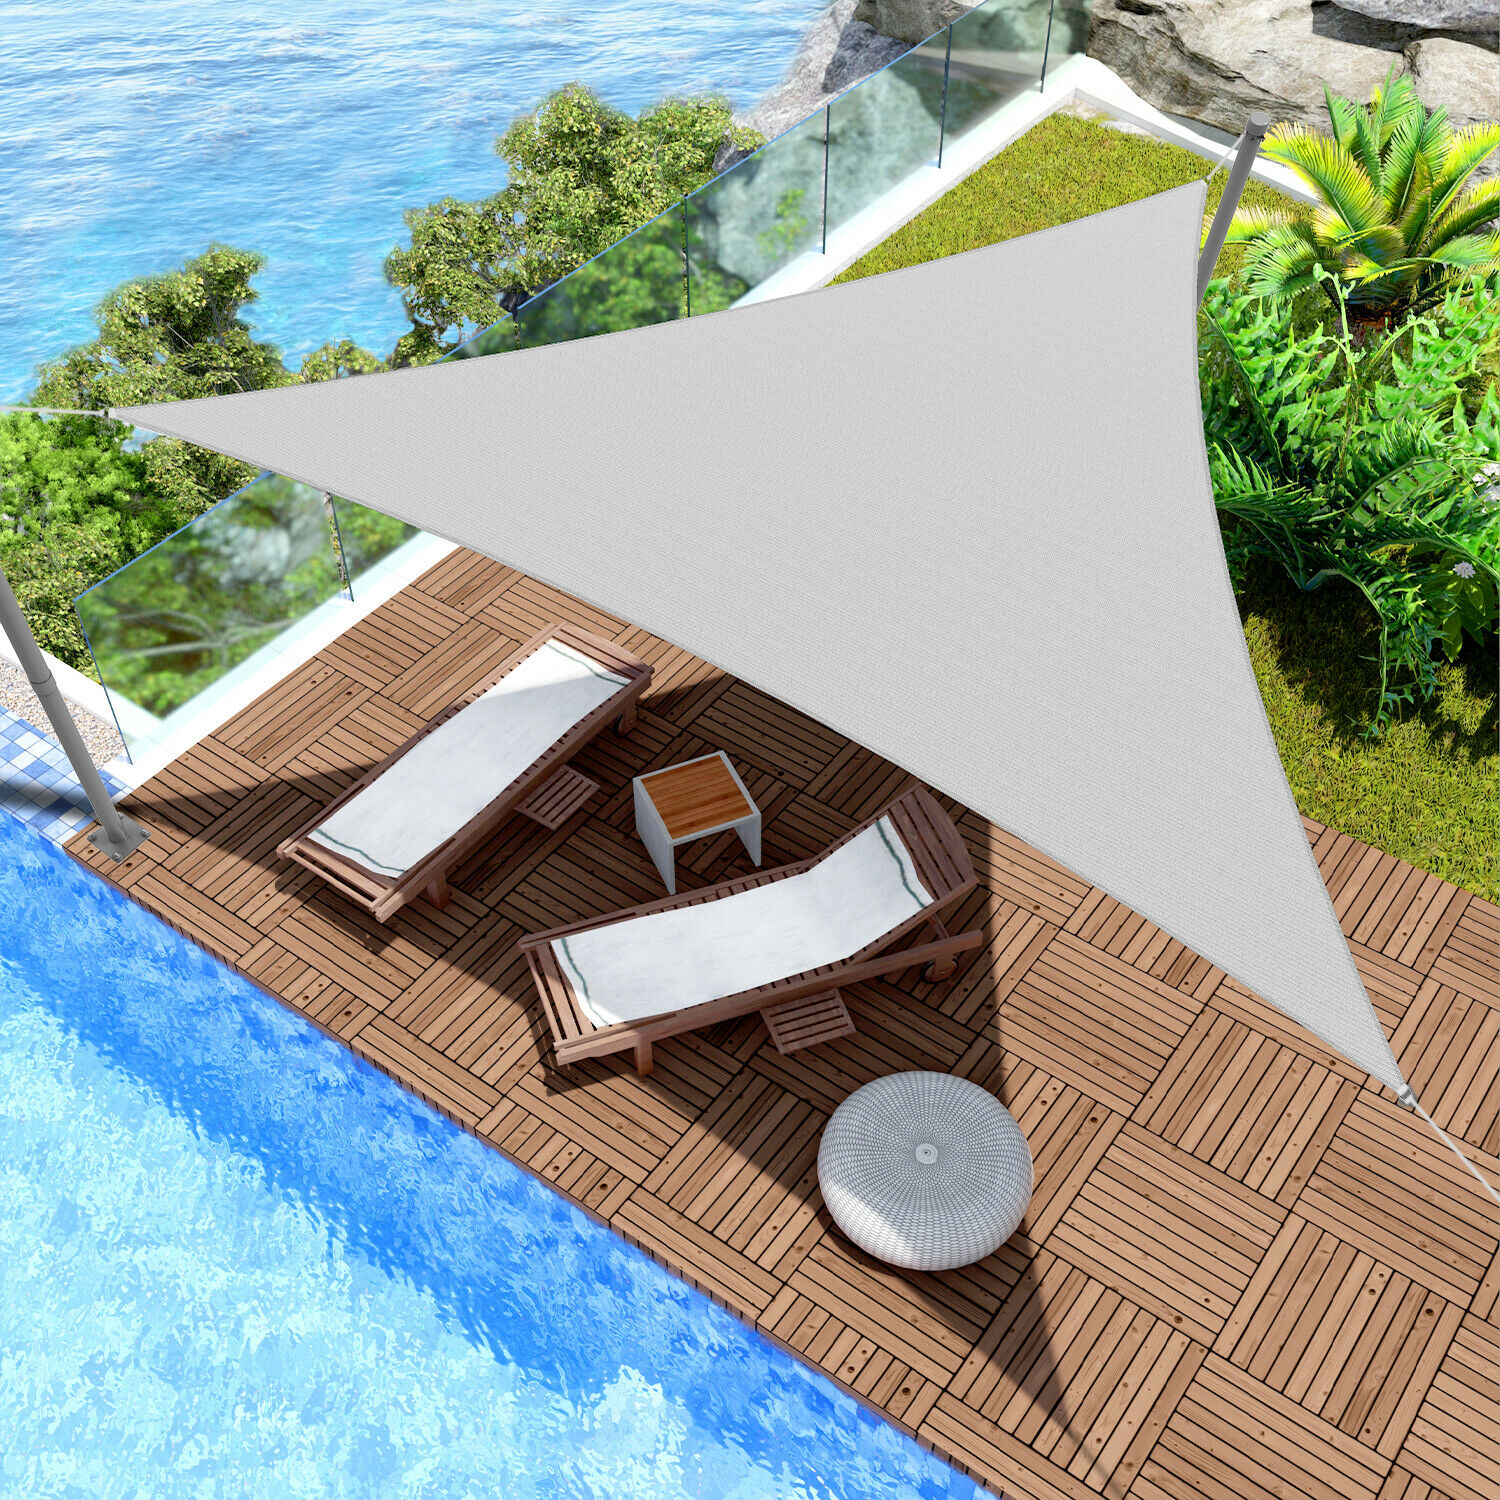 20'x20'x20' Triangle Sun Shade Sail Fabric Garden Outdoor Canopy Patio Pool Top